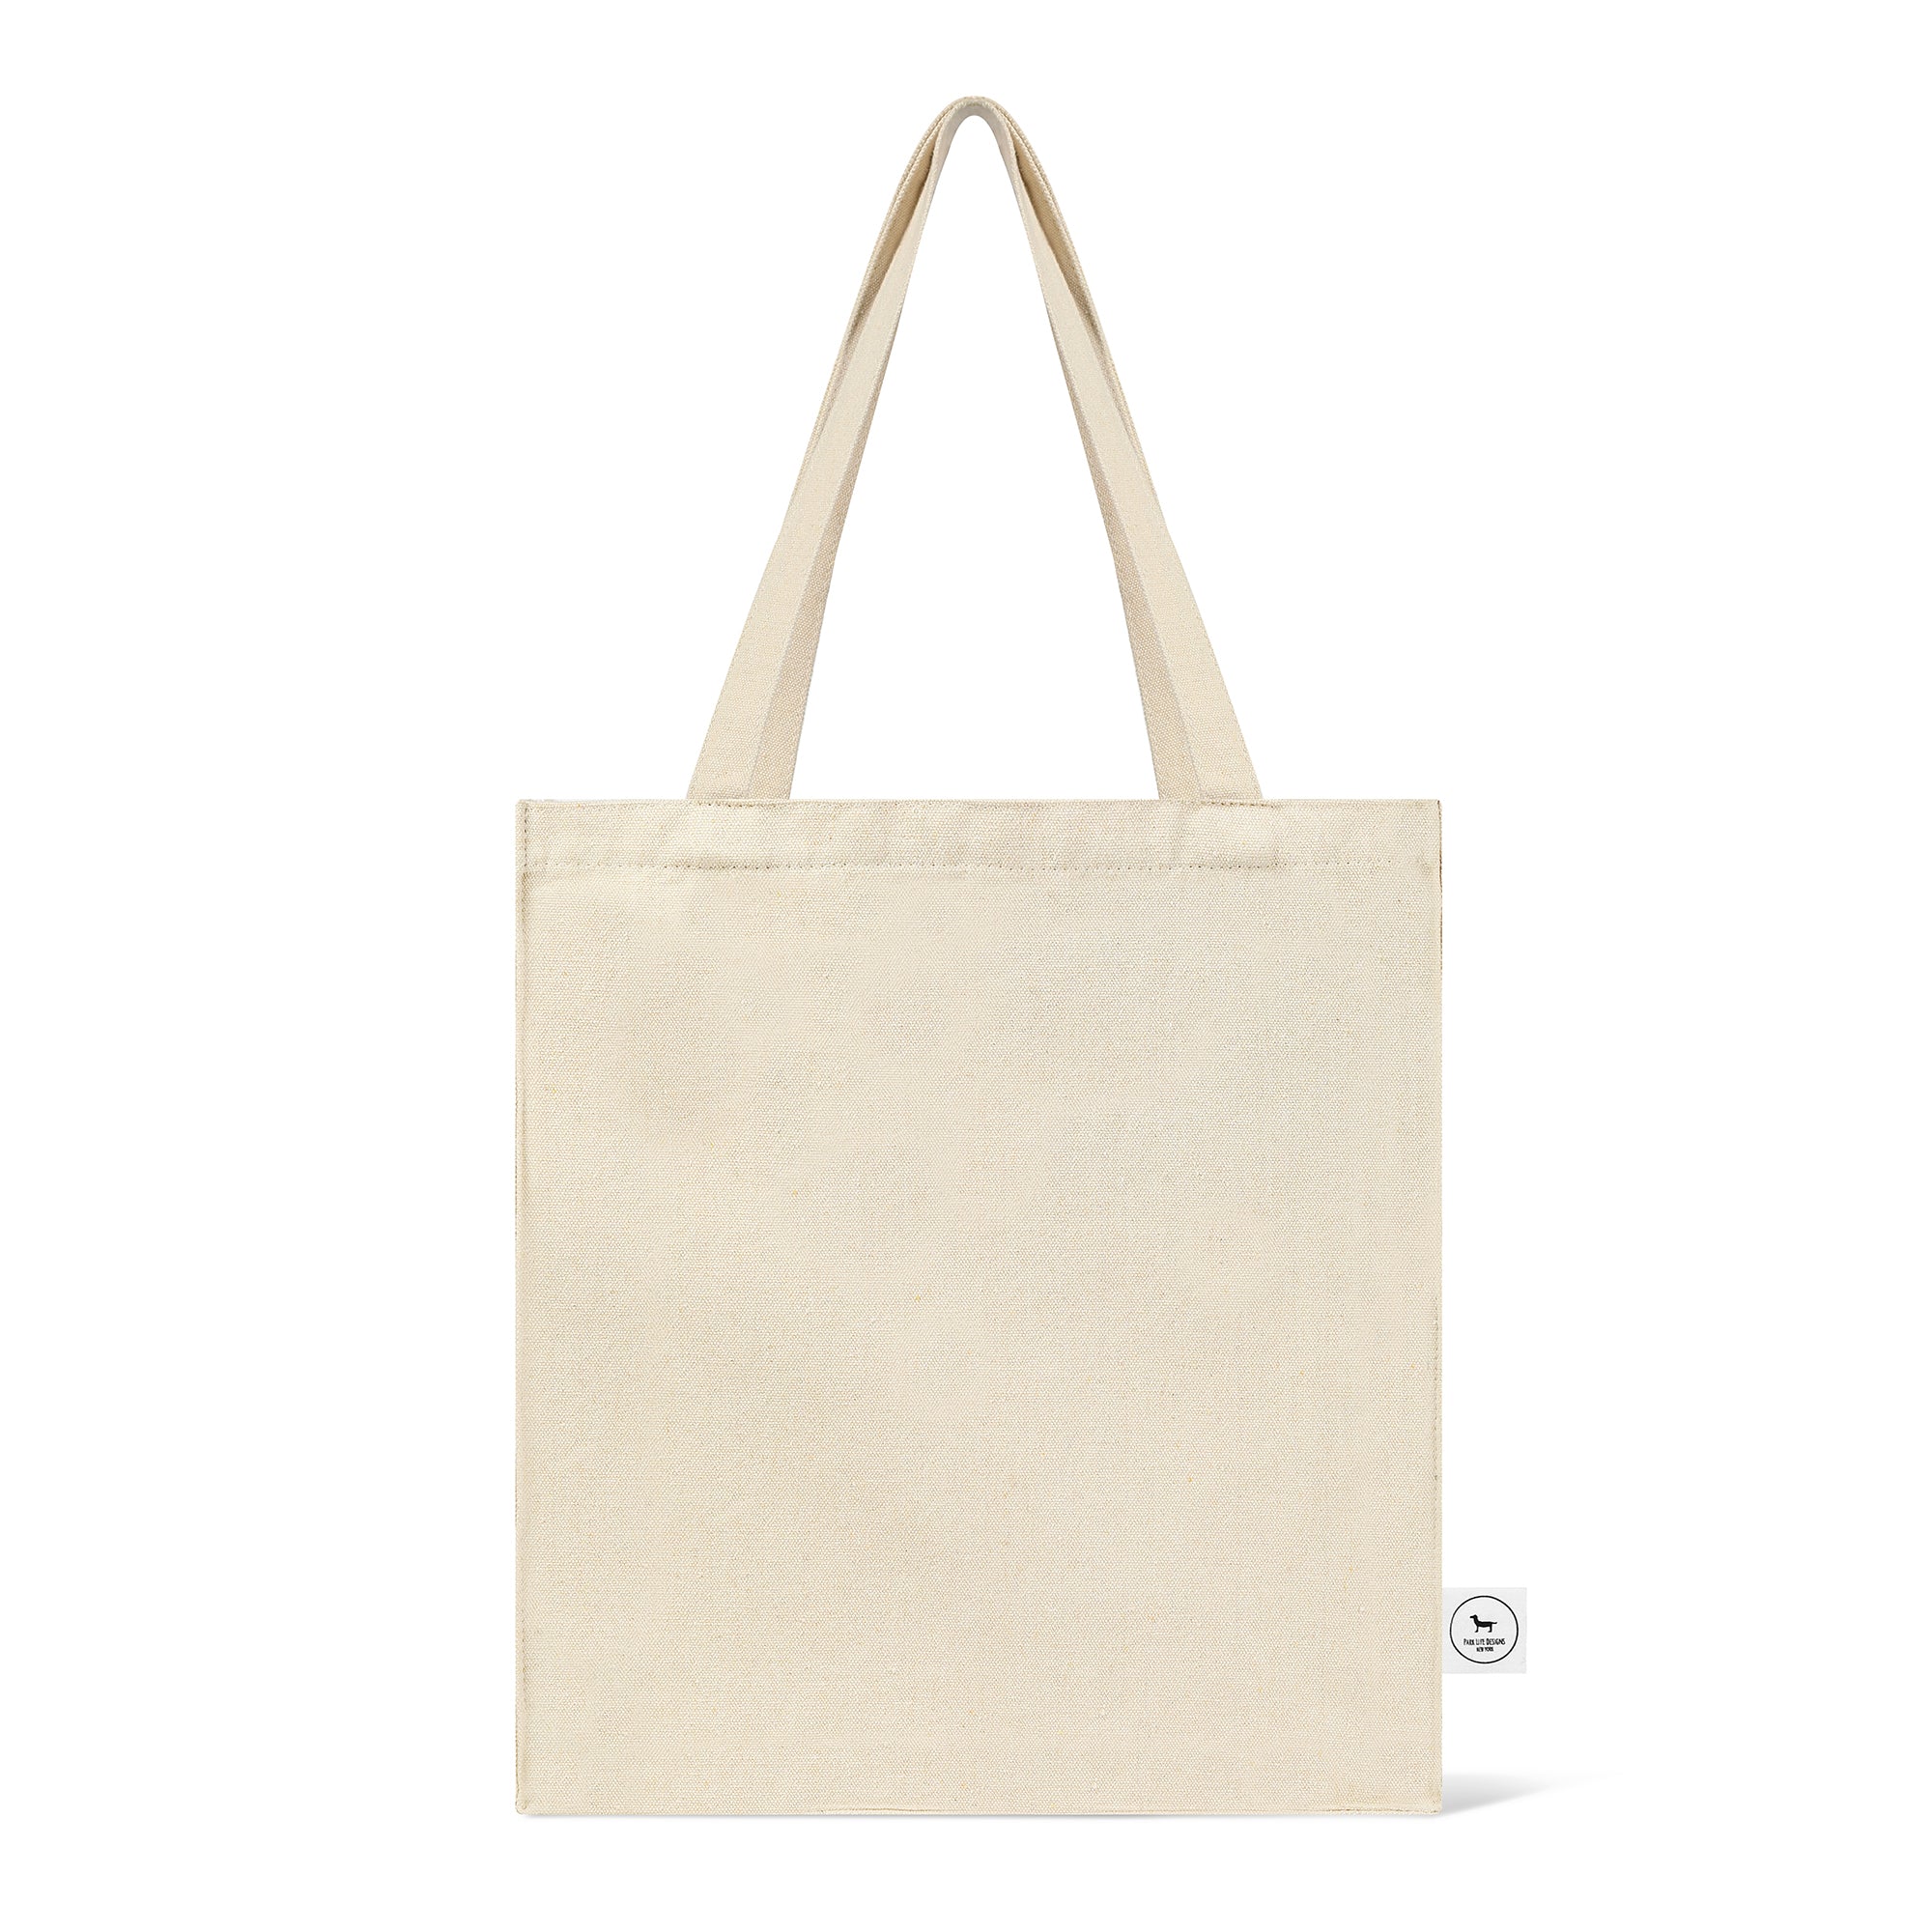 Hermes 25cm Birkin Bag in Cream Crais | Bags Of Luxury